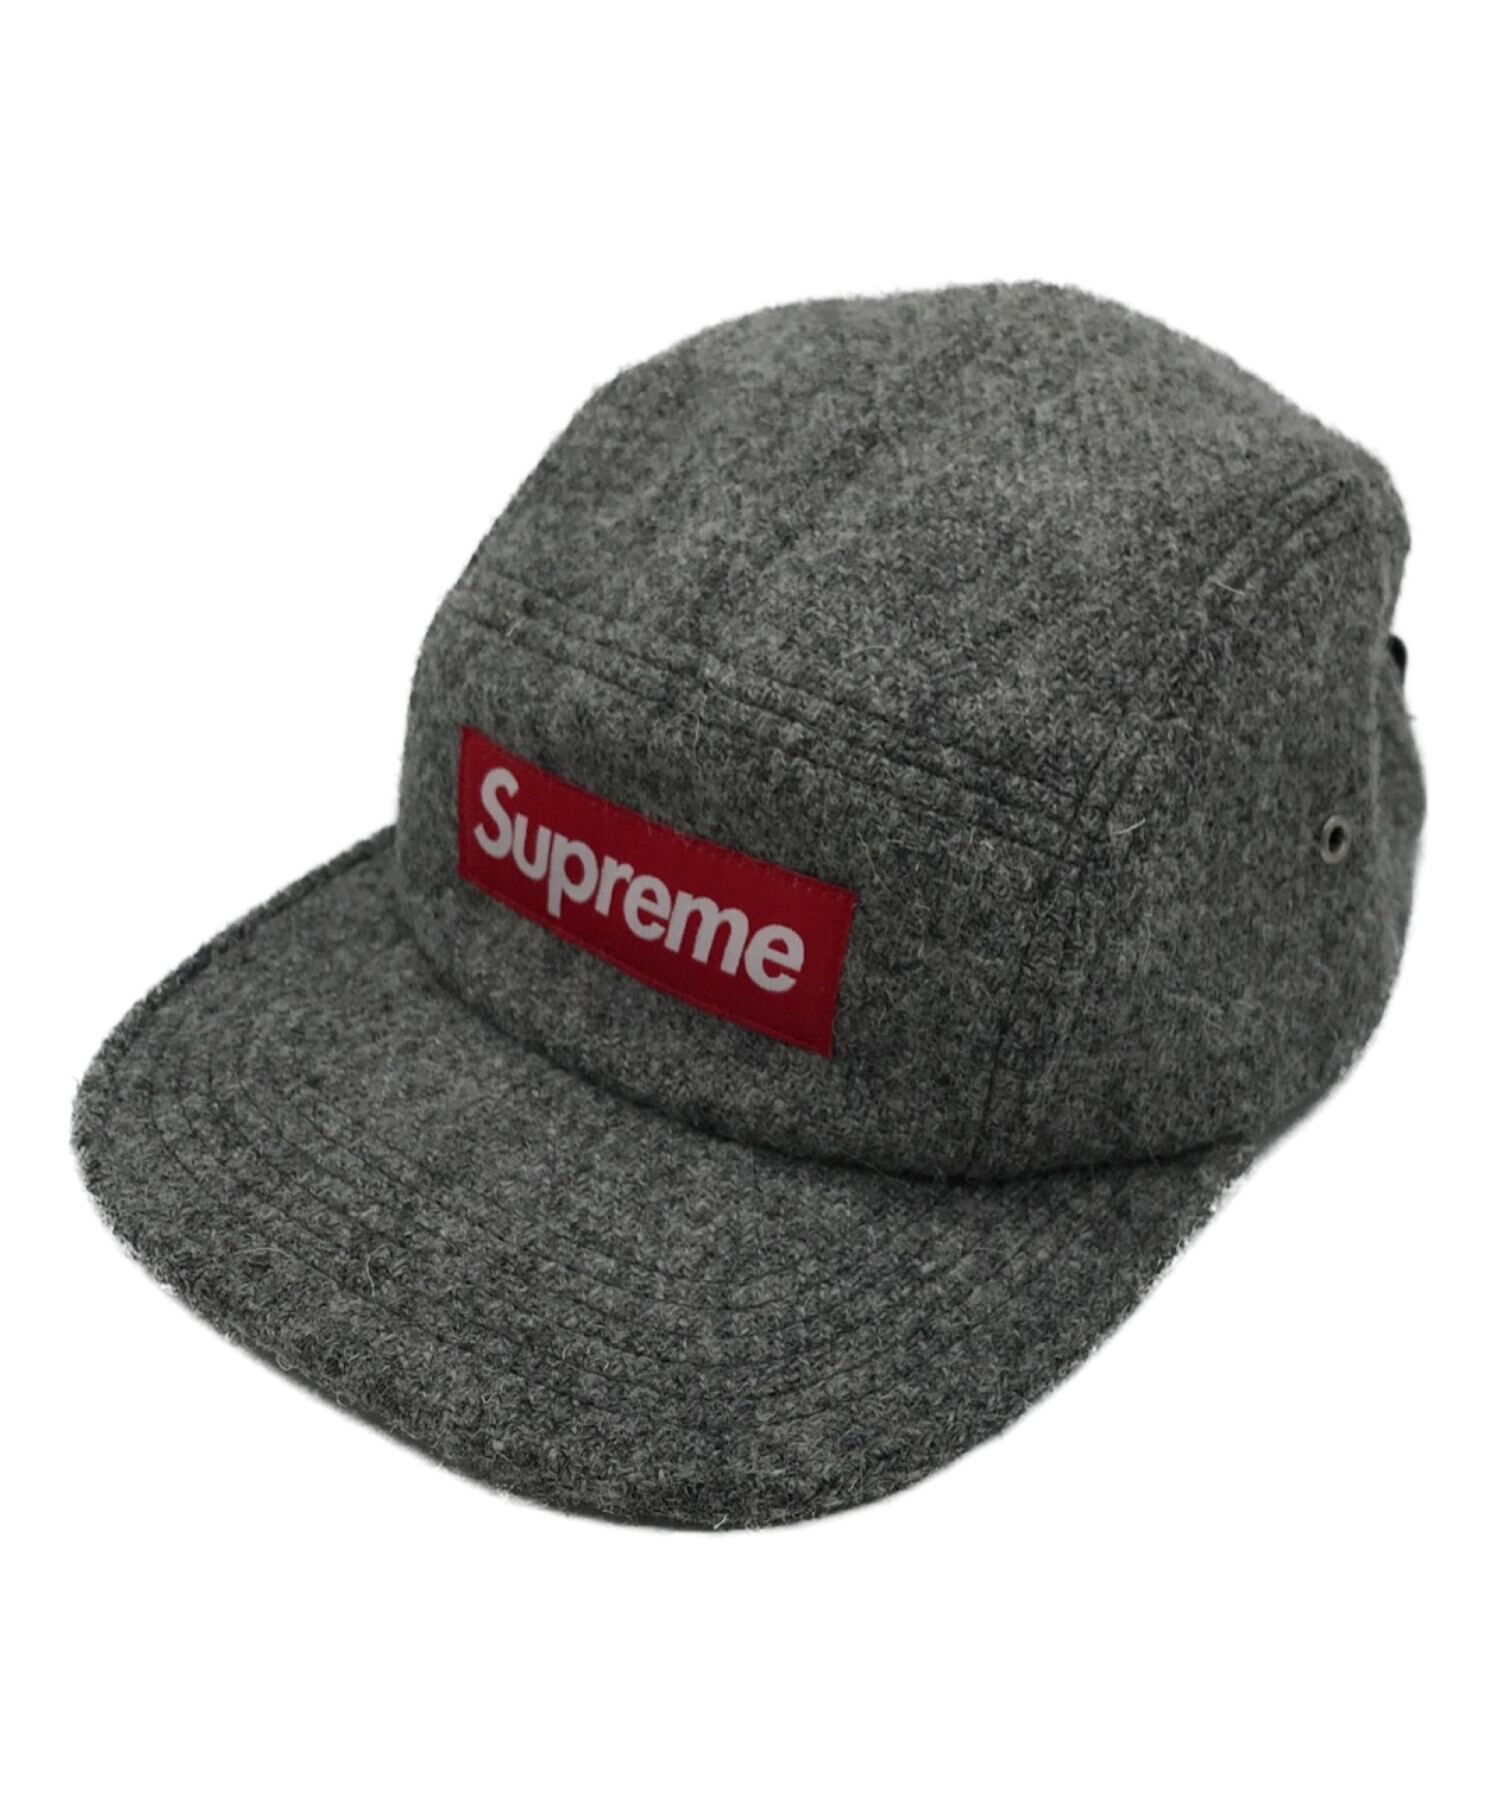 Supreme×HarrisTweedハリスツイード campcap帽子